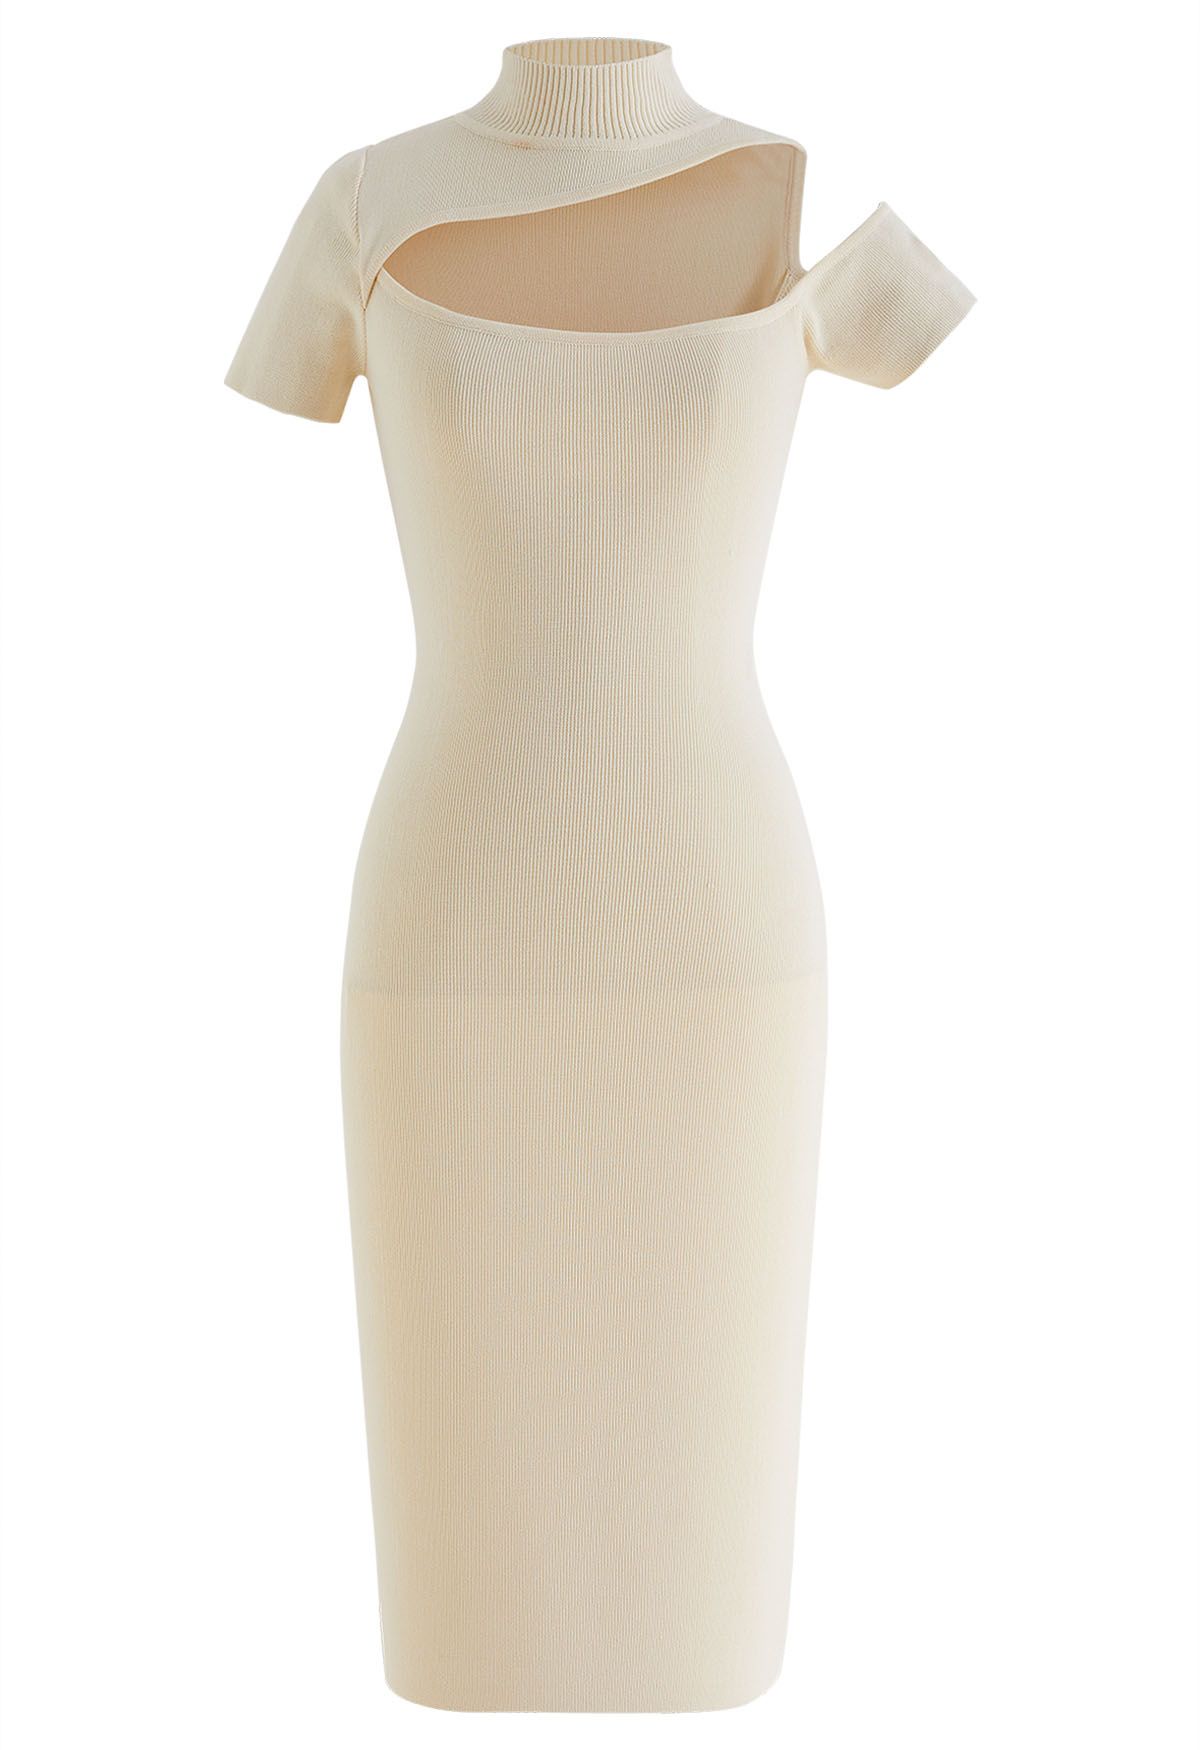 Cutout Neckline Bodycon Knit Dress in Cream